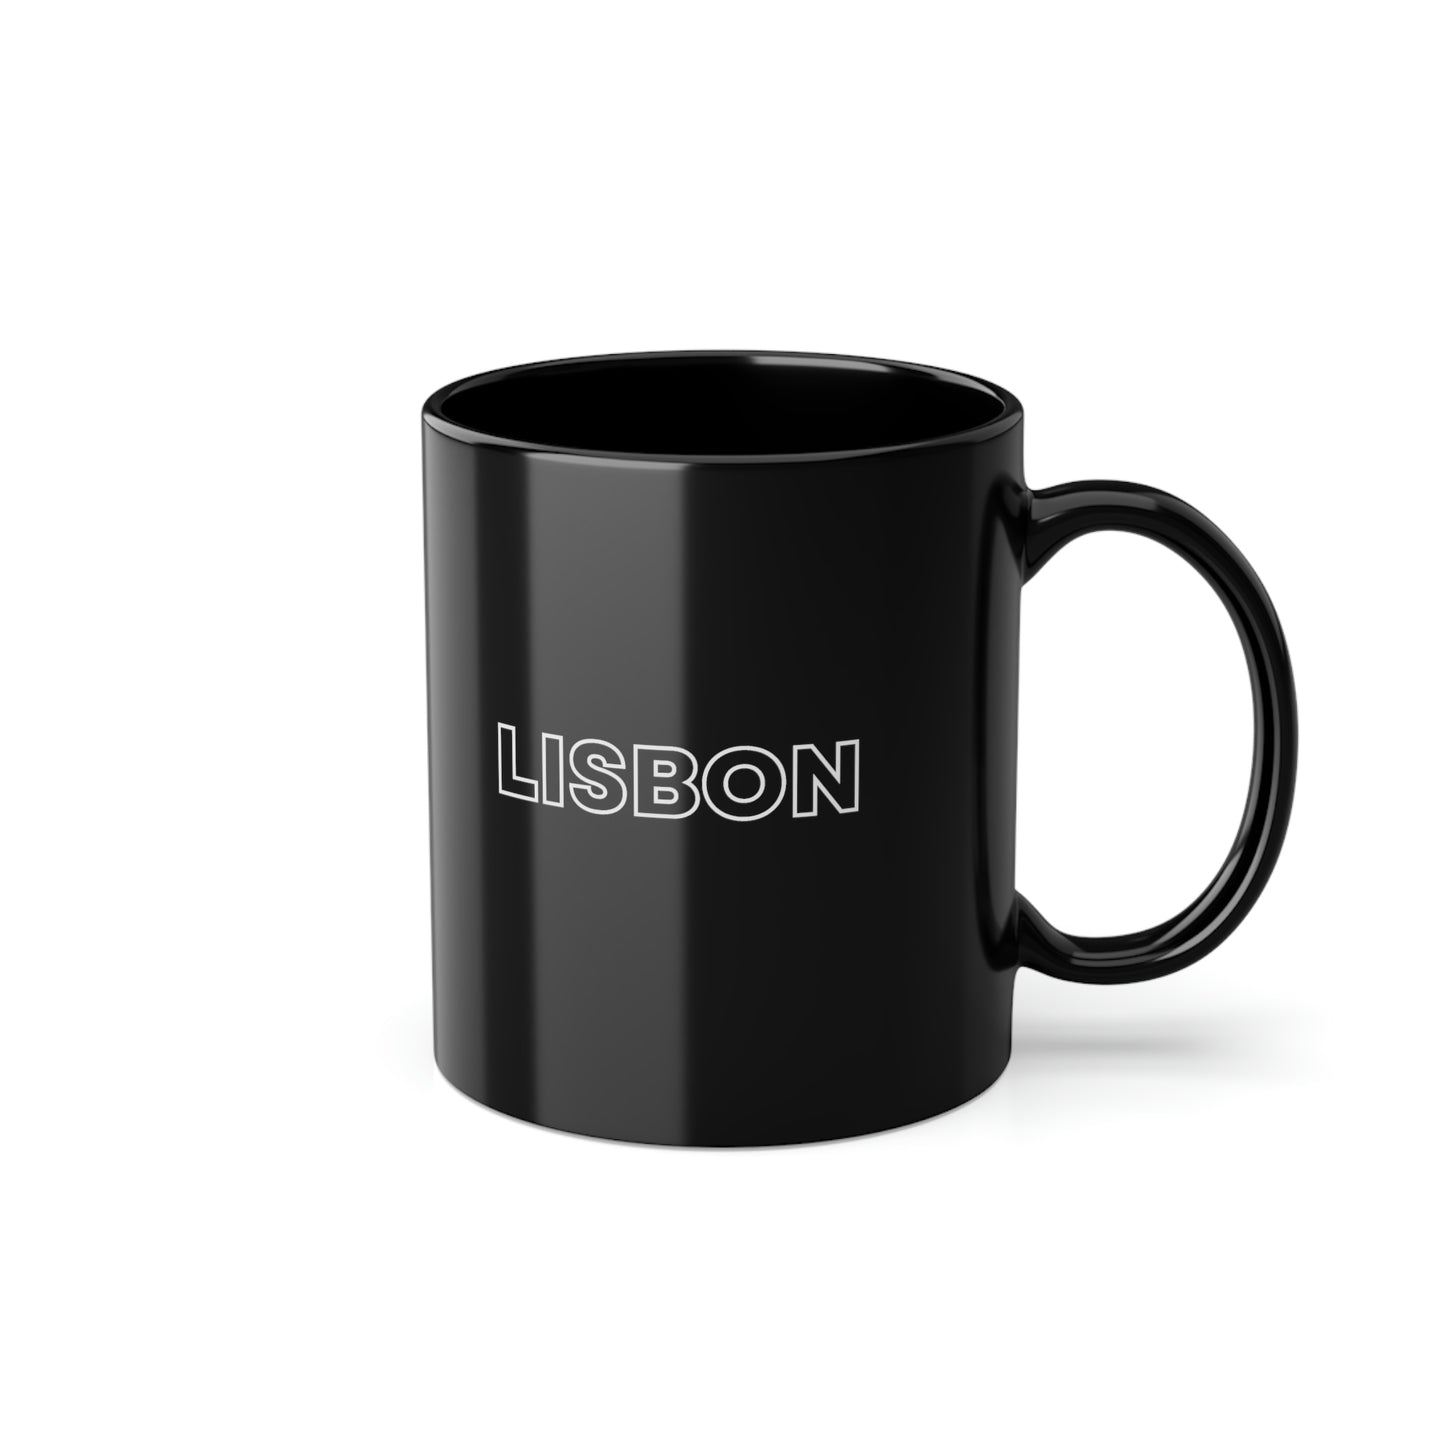 LISBON - CITY MUG - Black Coffee Cup, 11oz